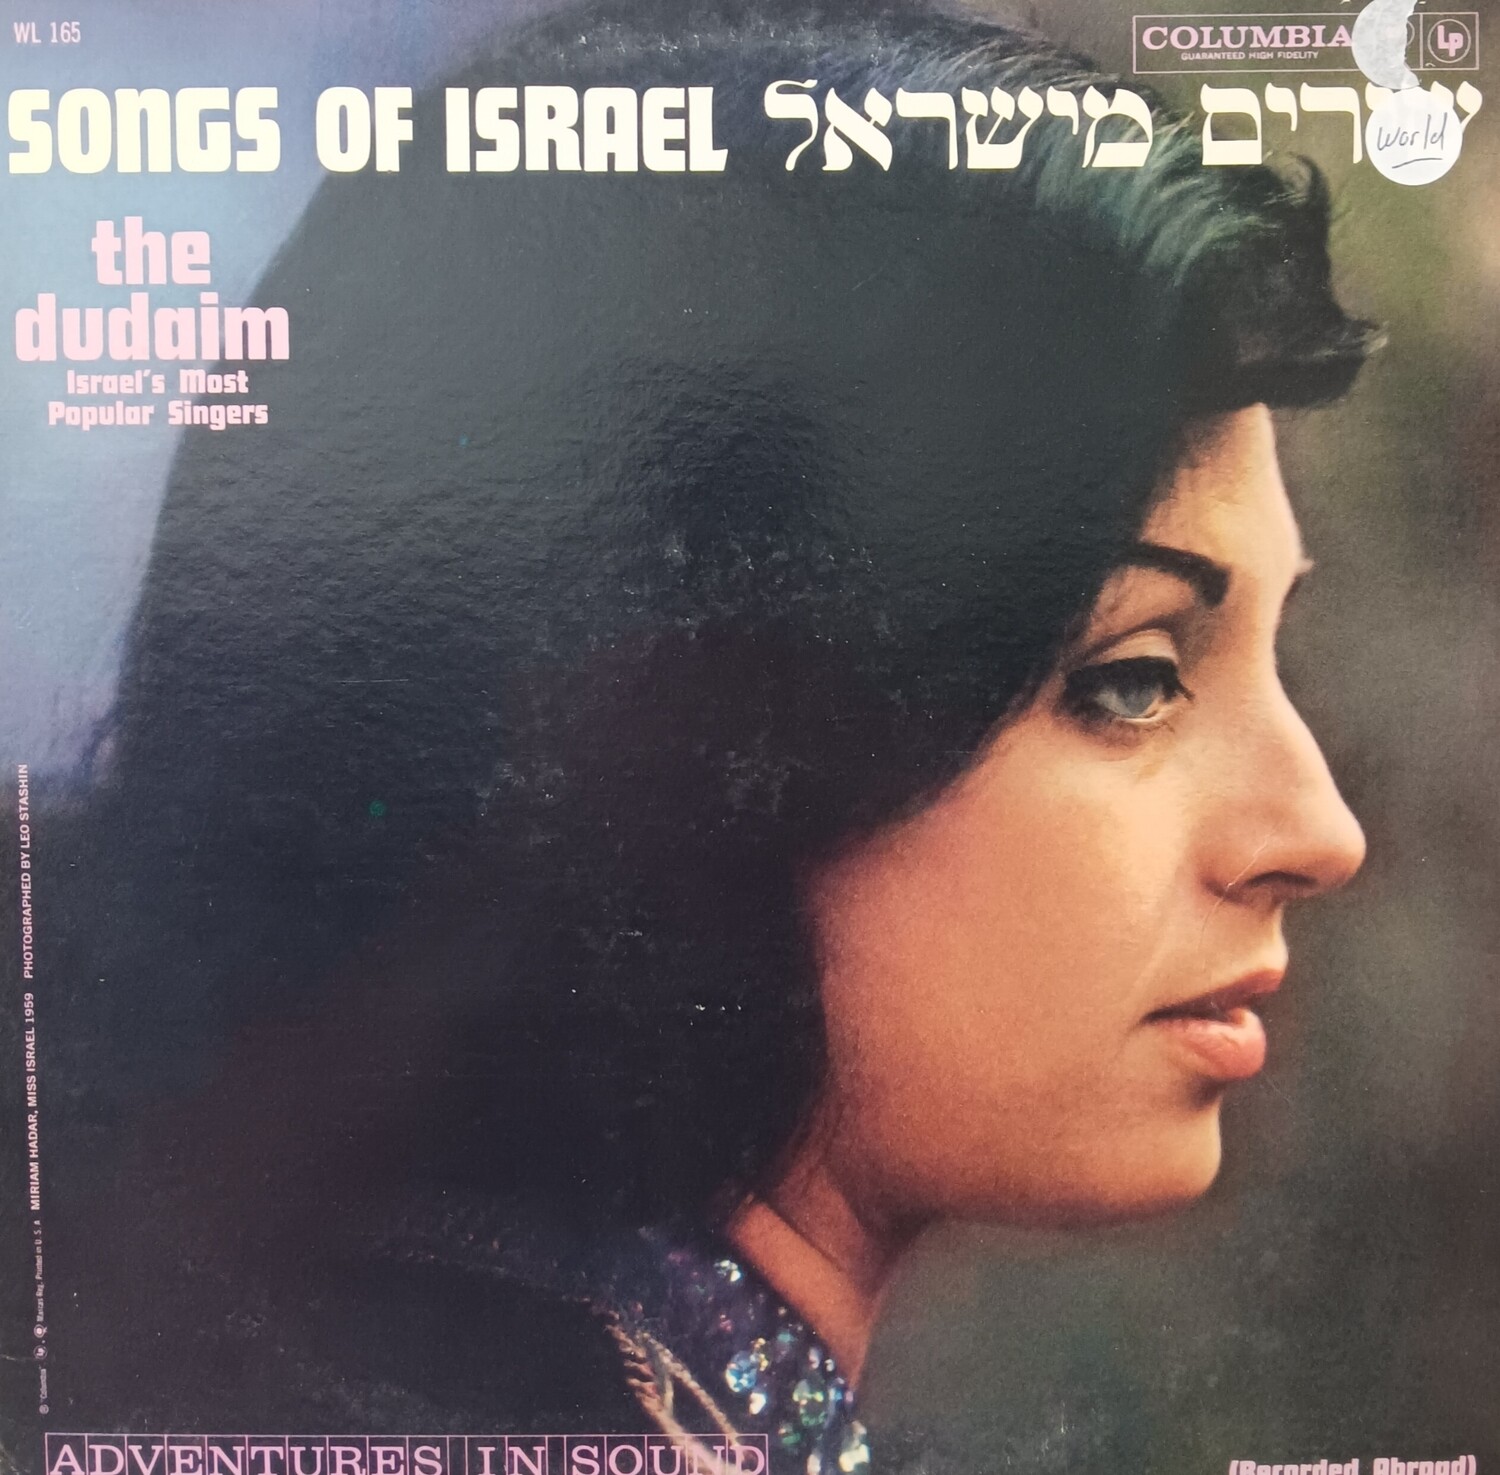 THE DUDAIM - The Songs of Israel